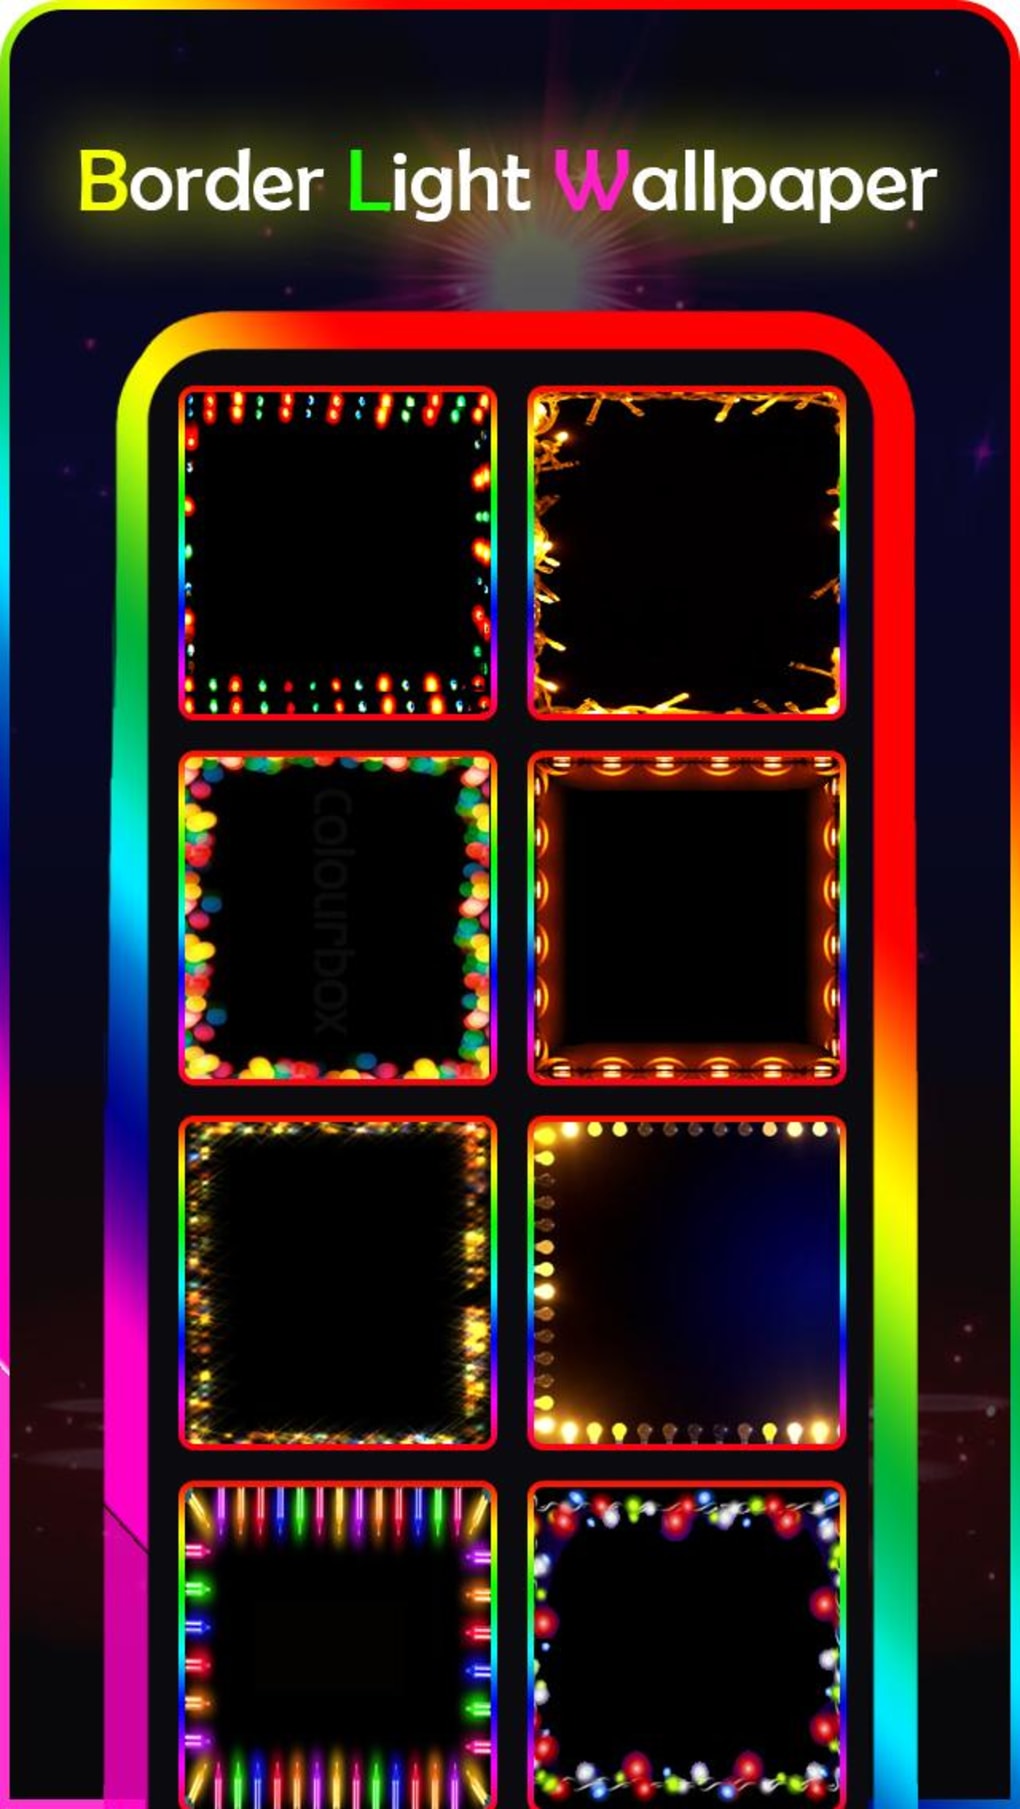 Border Light Wallpaper 2020 - Color Live Wallpaper APK cho Android - Tải về